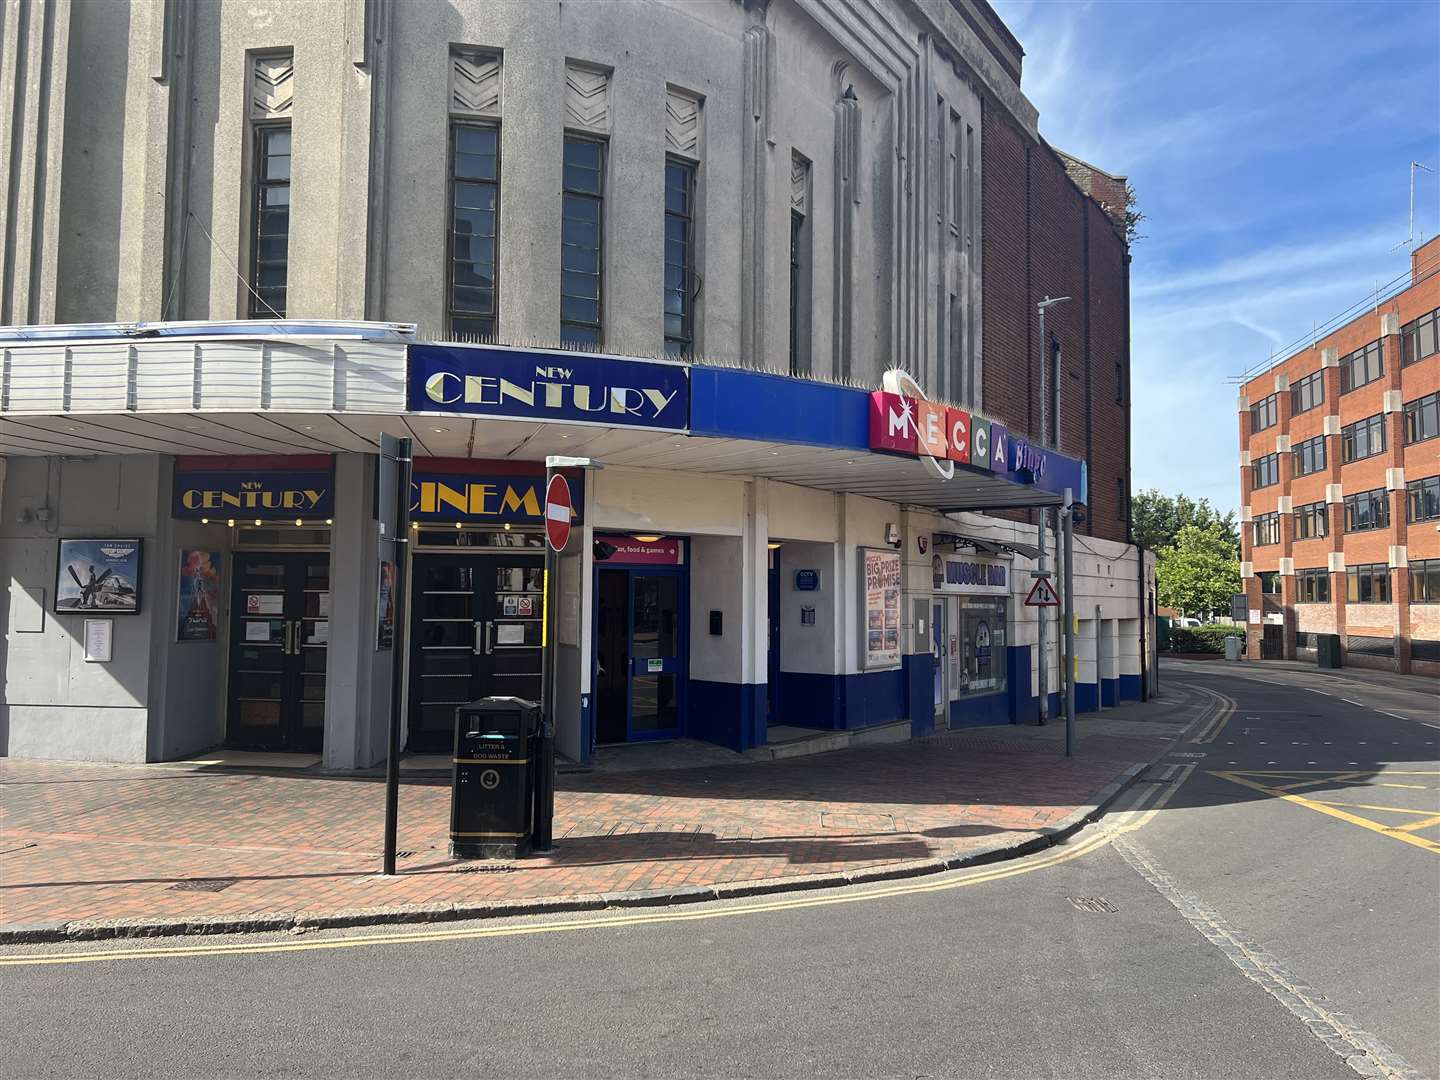 The New Century Cinema and Mecca Bingo in Sittingbourne have closed